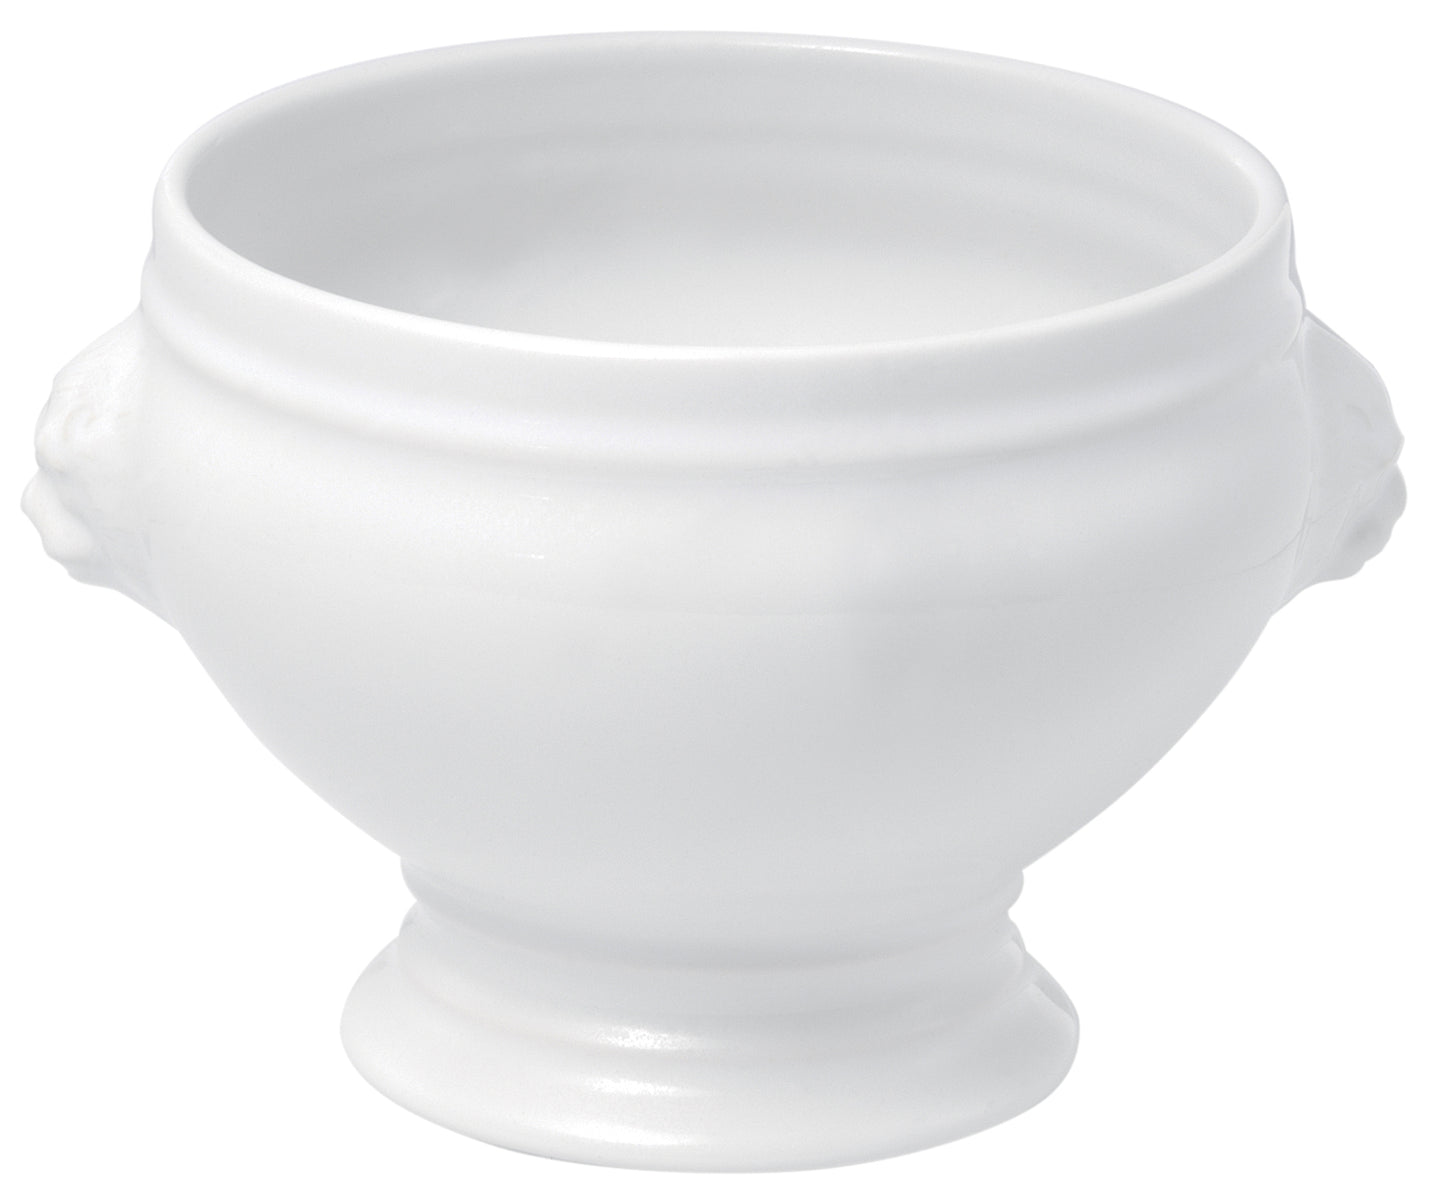 Revol lion's head bowl, white